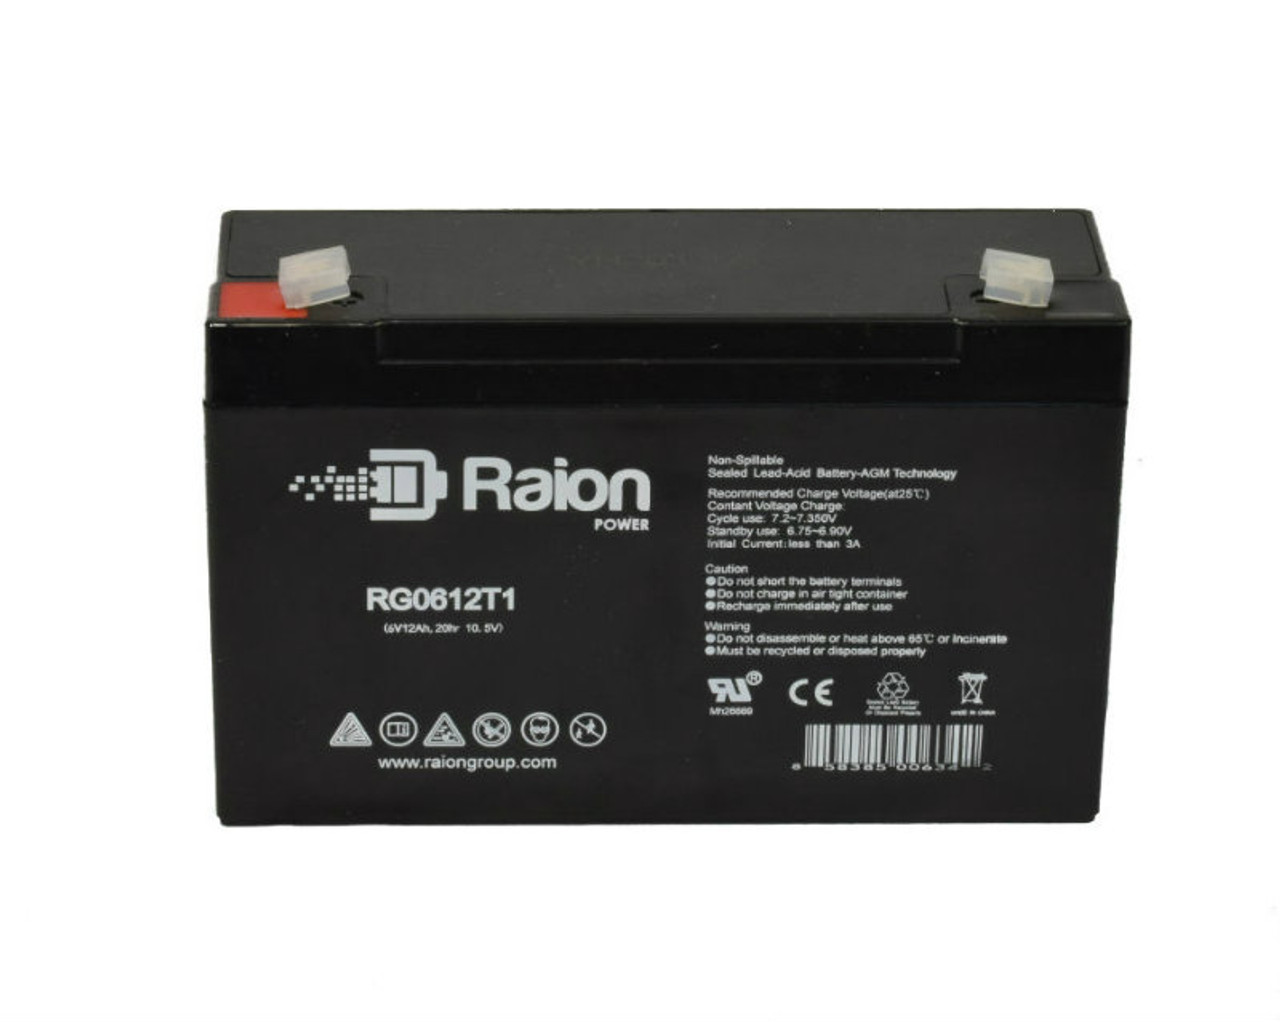 Raion Power RG06120T1 SLA Battery for Big Beam 2CL6S16